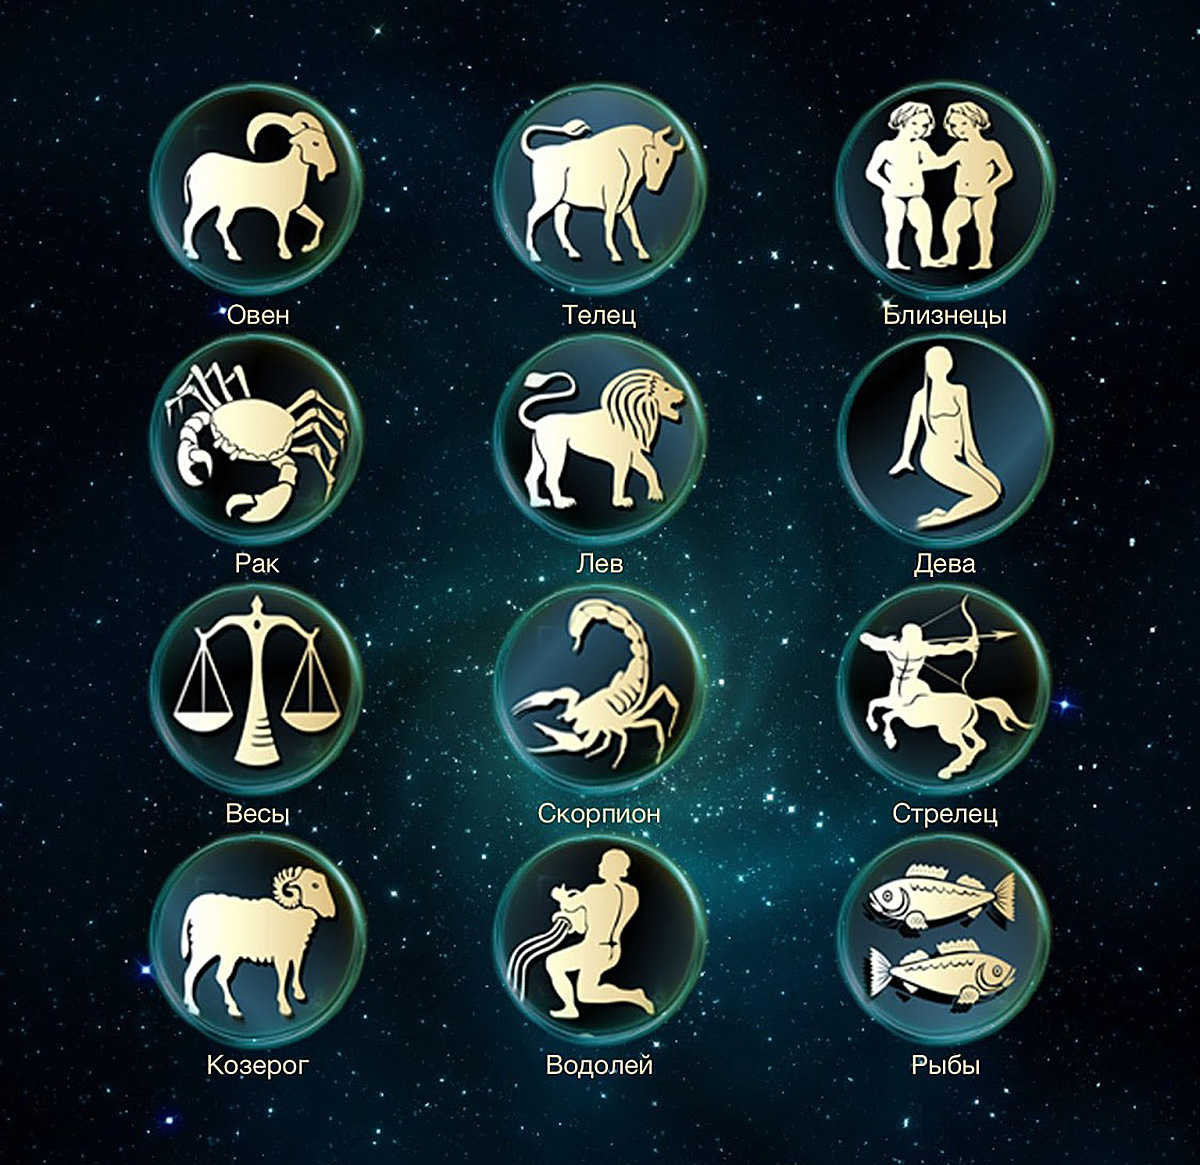 Zodiac signs. 